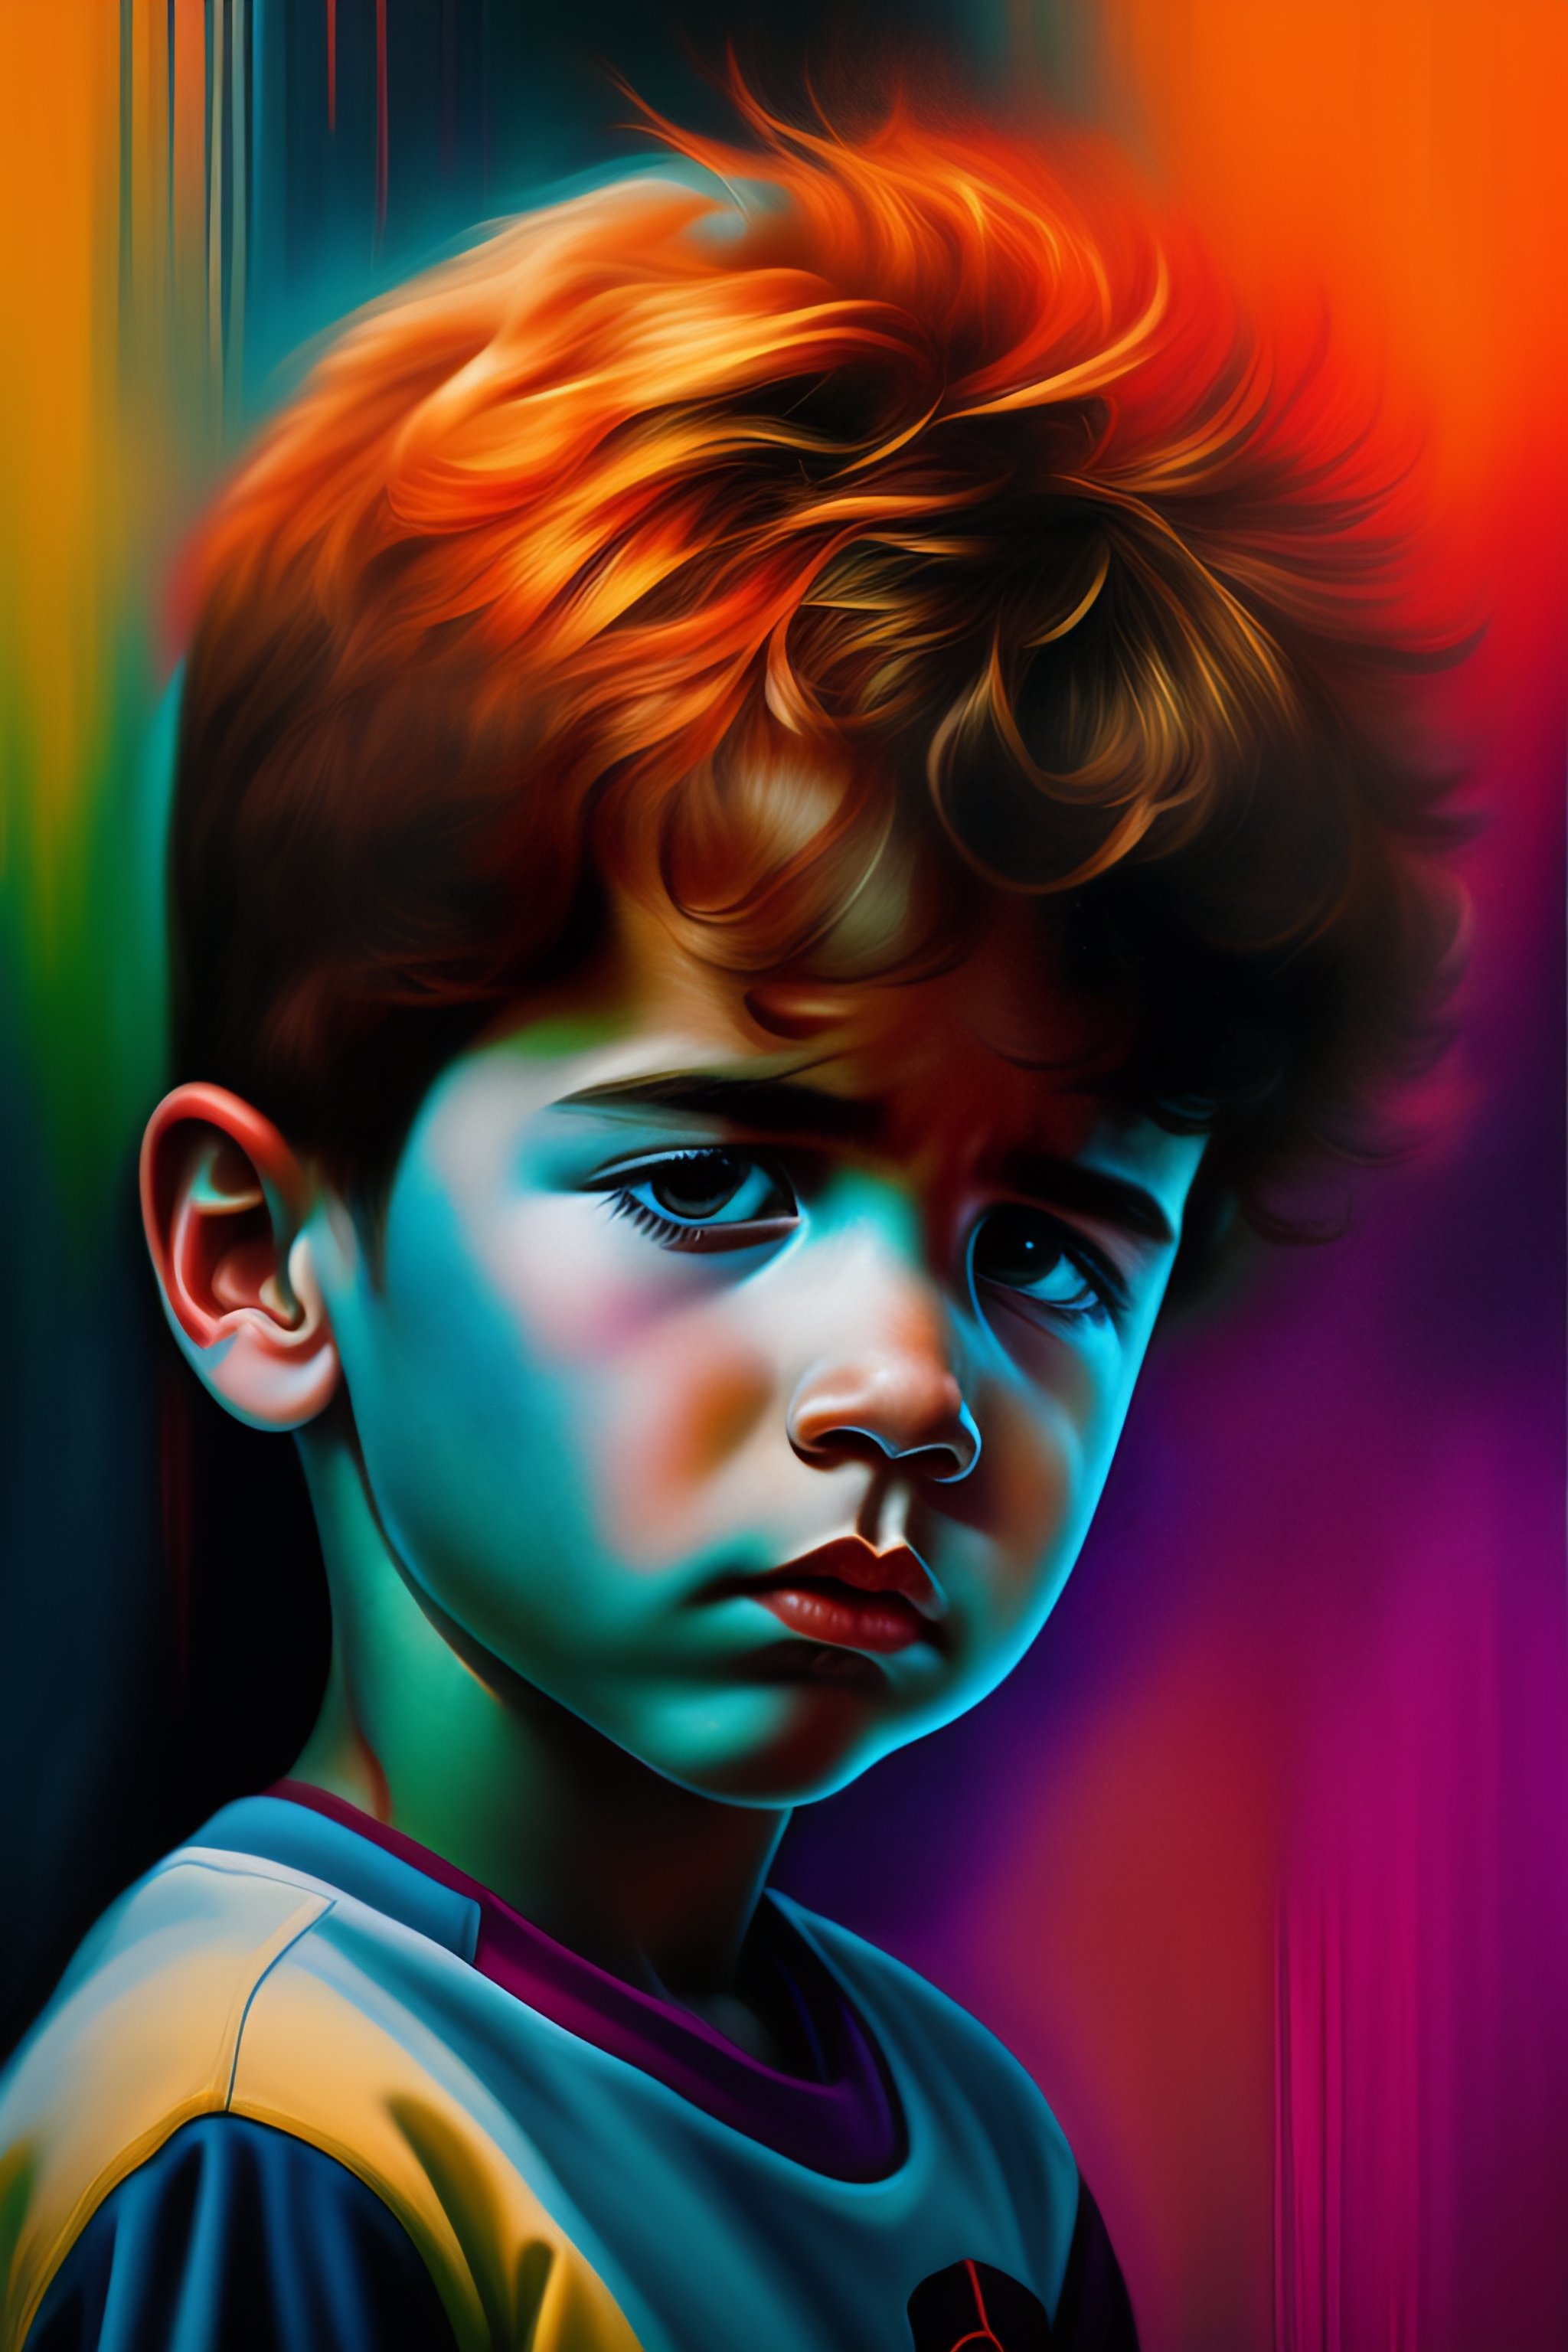 Lexica - Abstract of a struggling boy